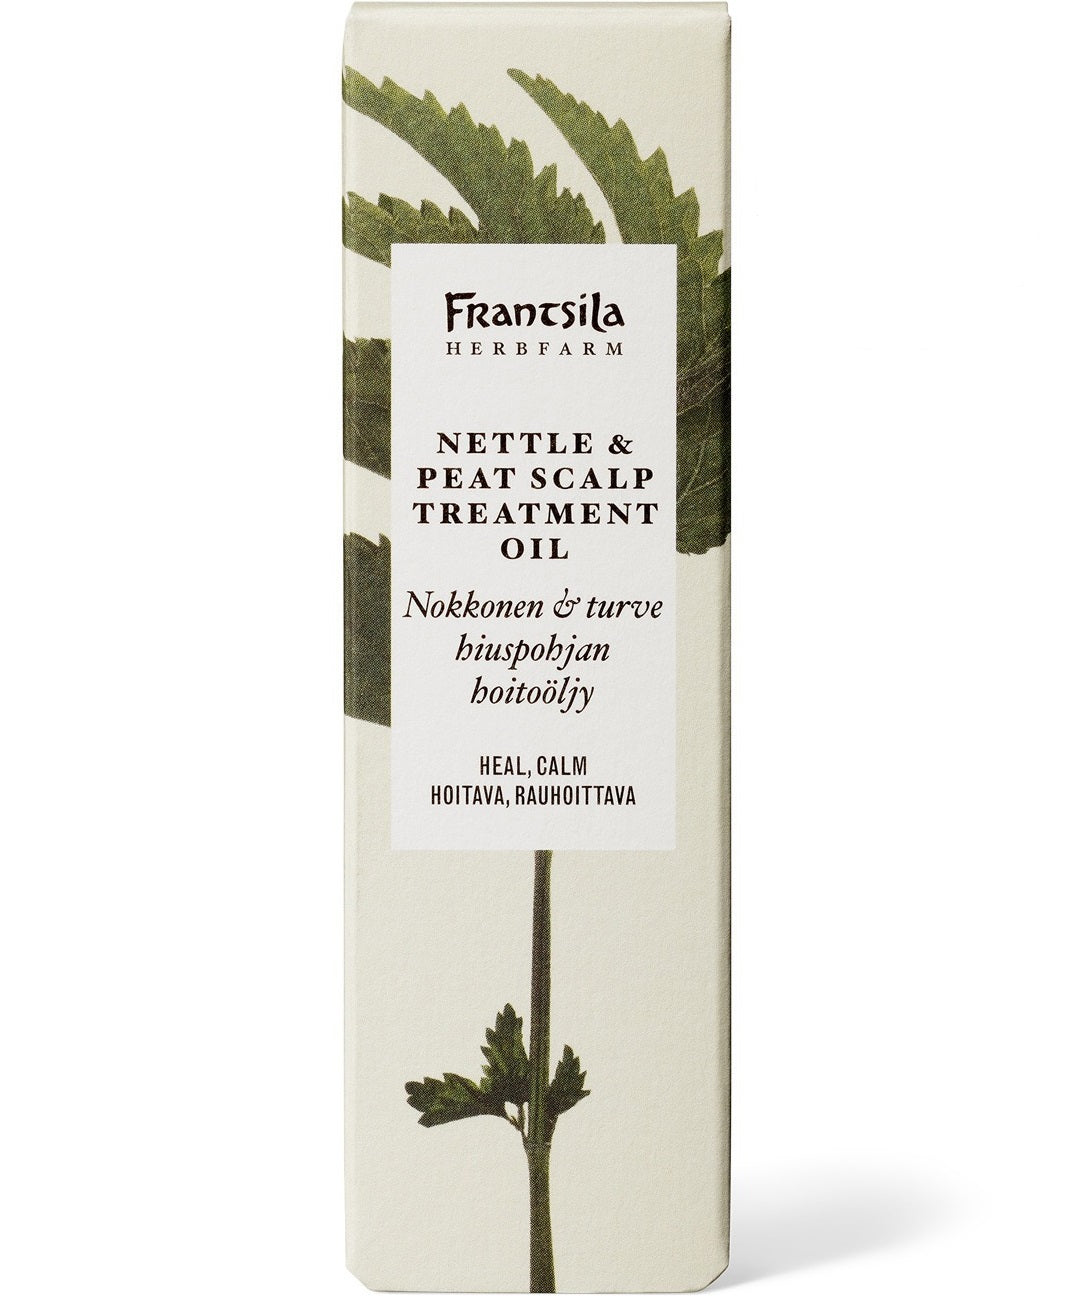 Frantsila Nettle & Peat Scalp Treatment Oil